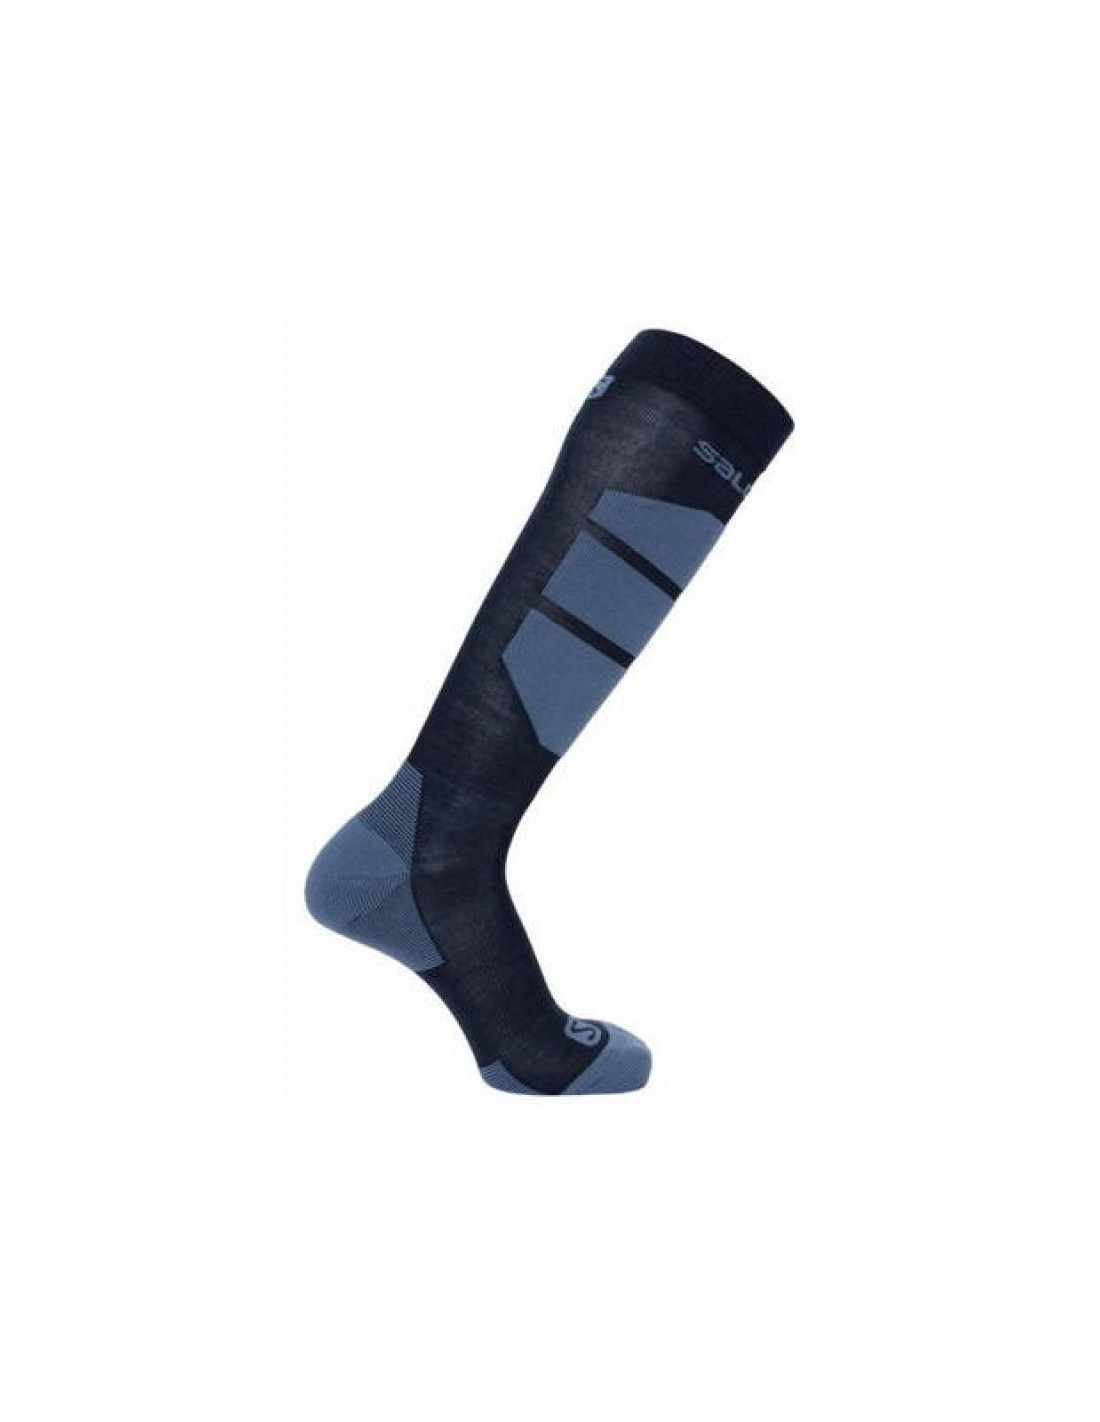 Salomon ski snowboard socks C14445